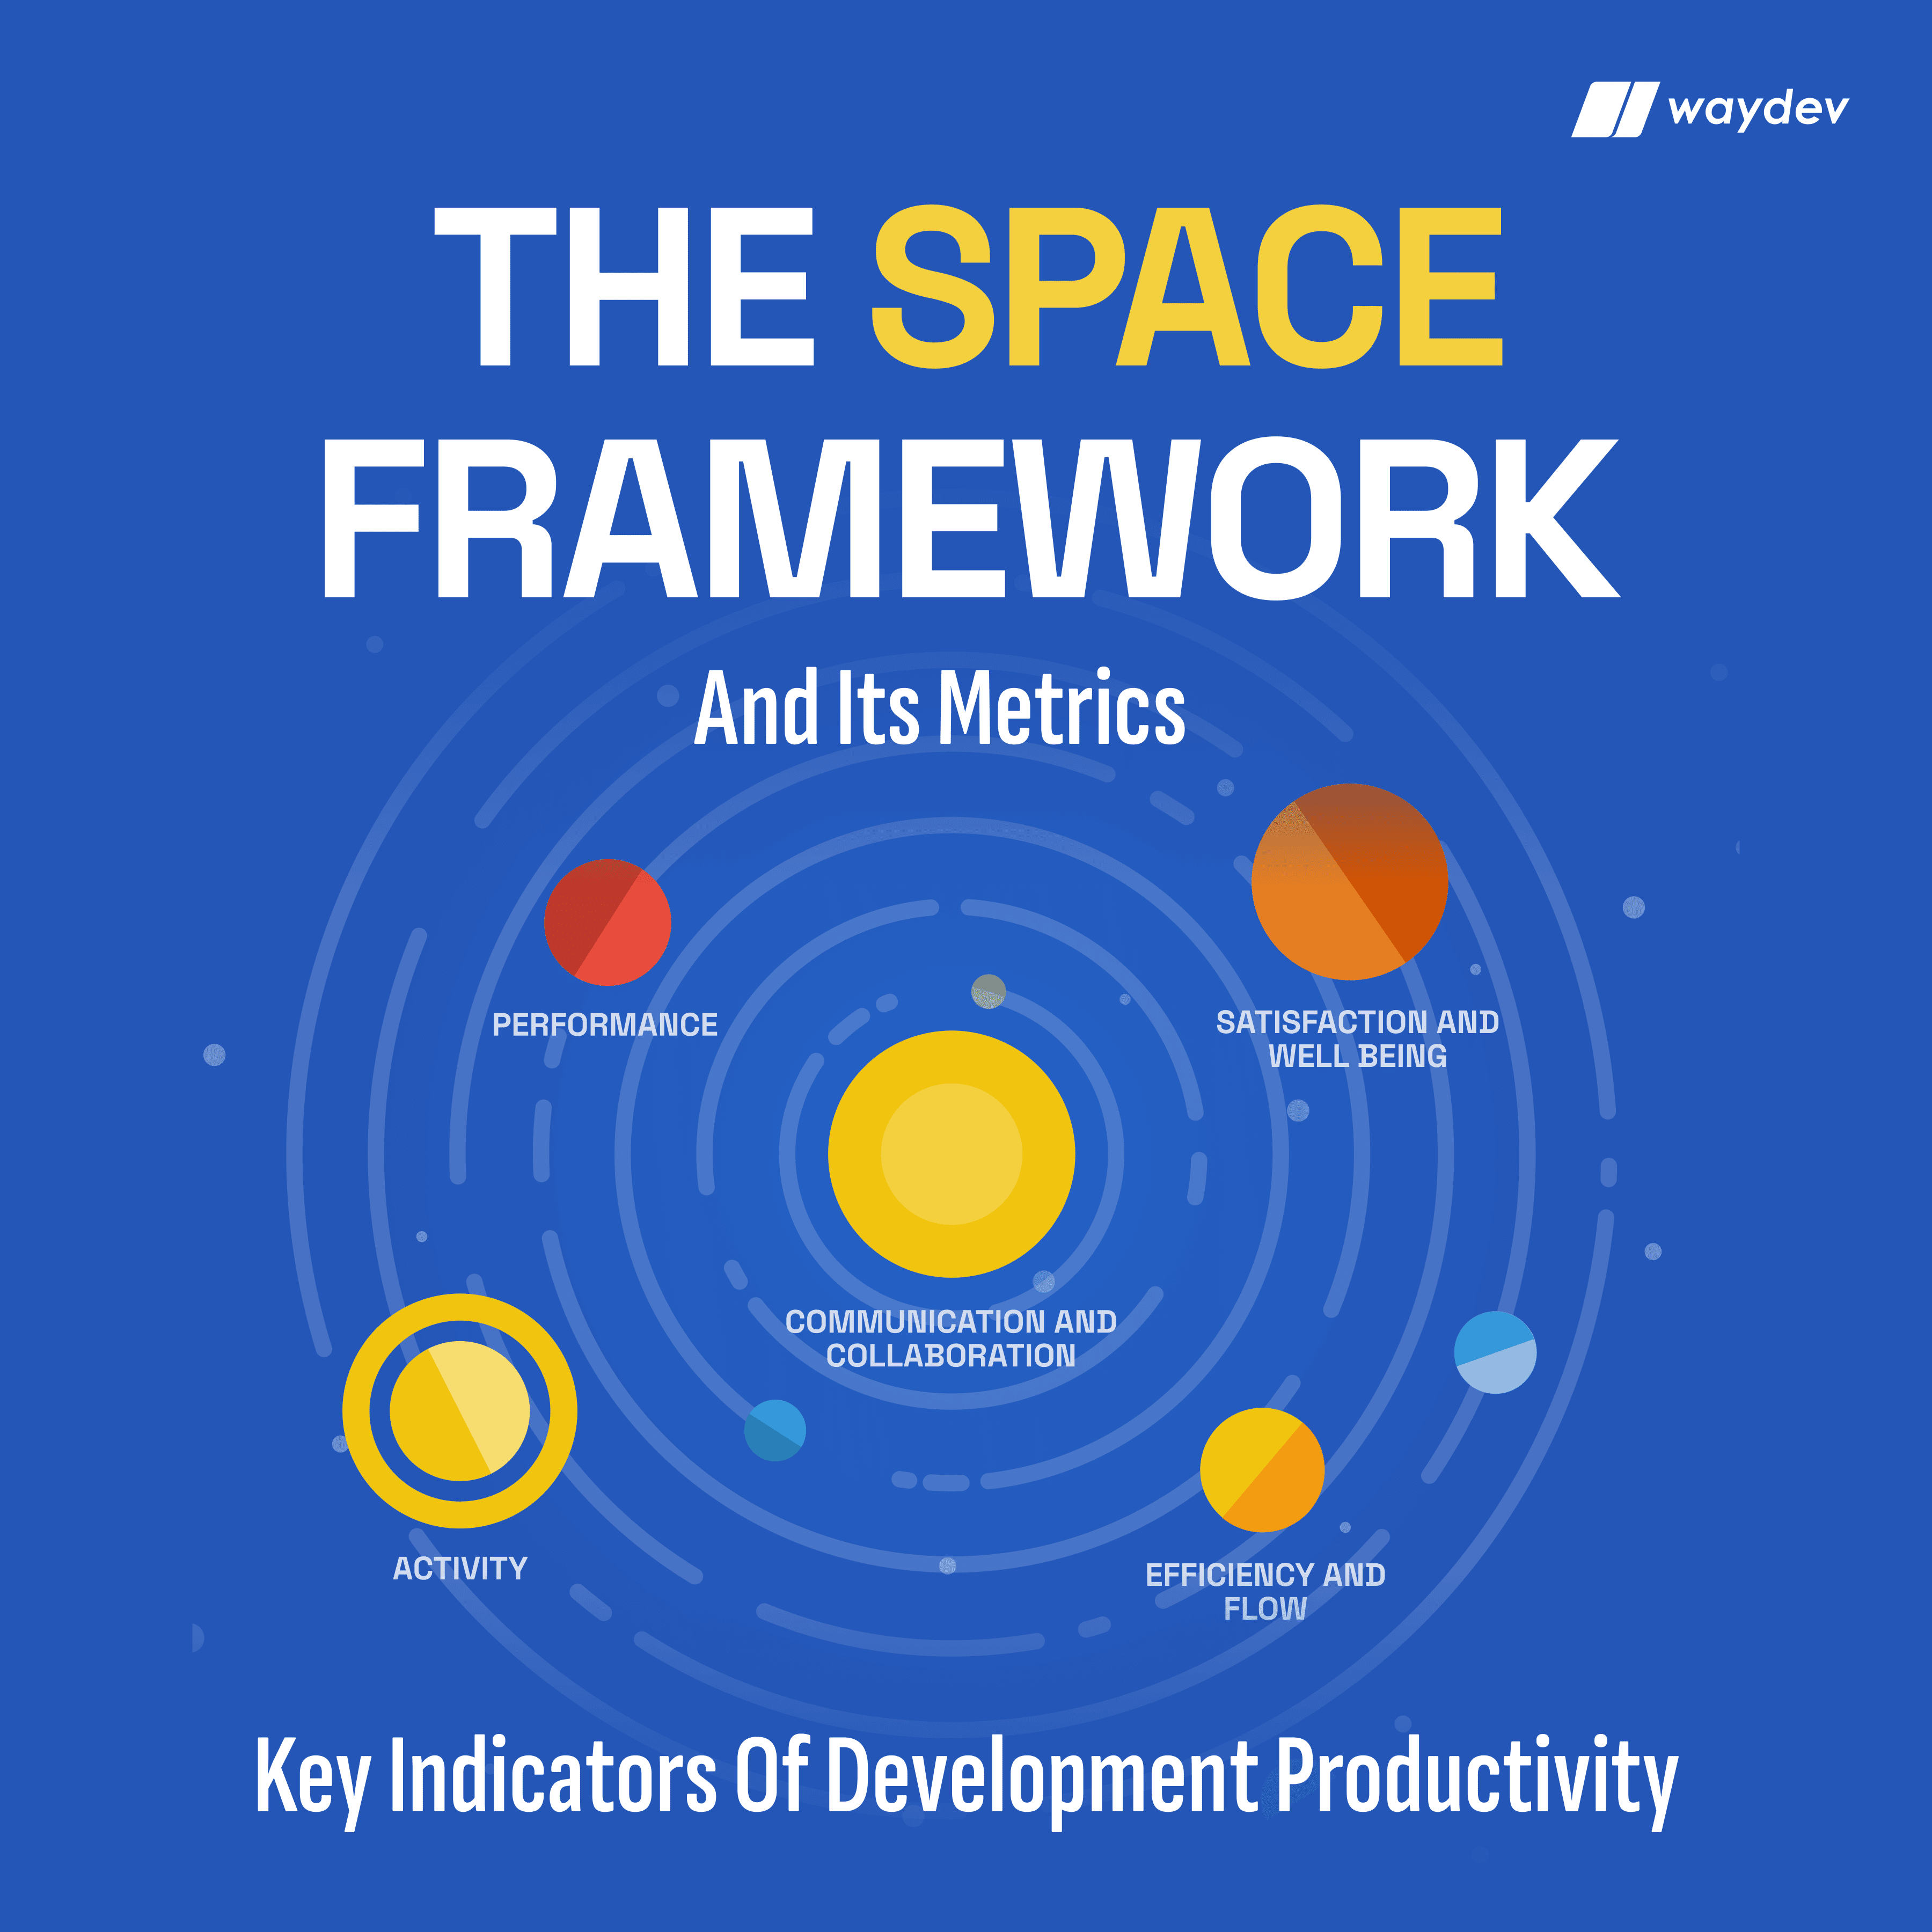 The SPACE Framework Playbook